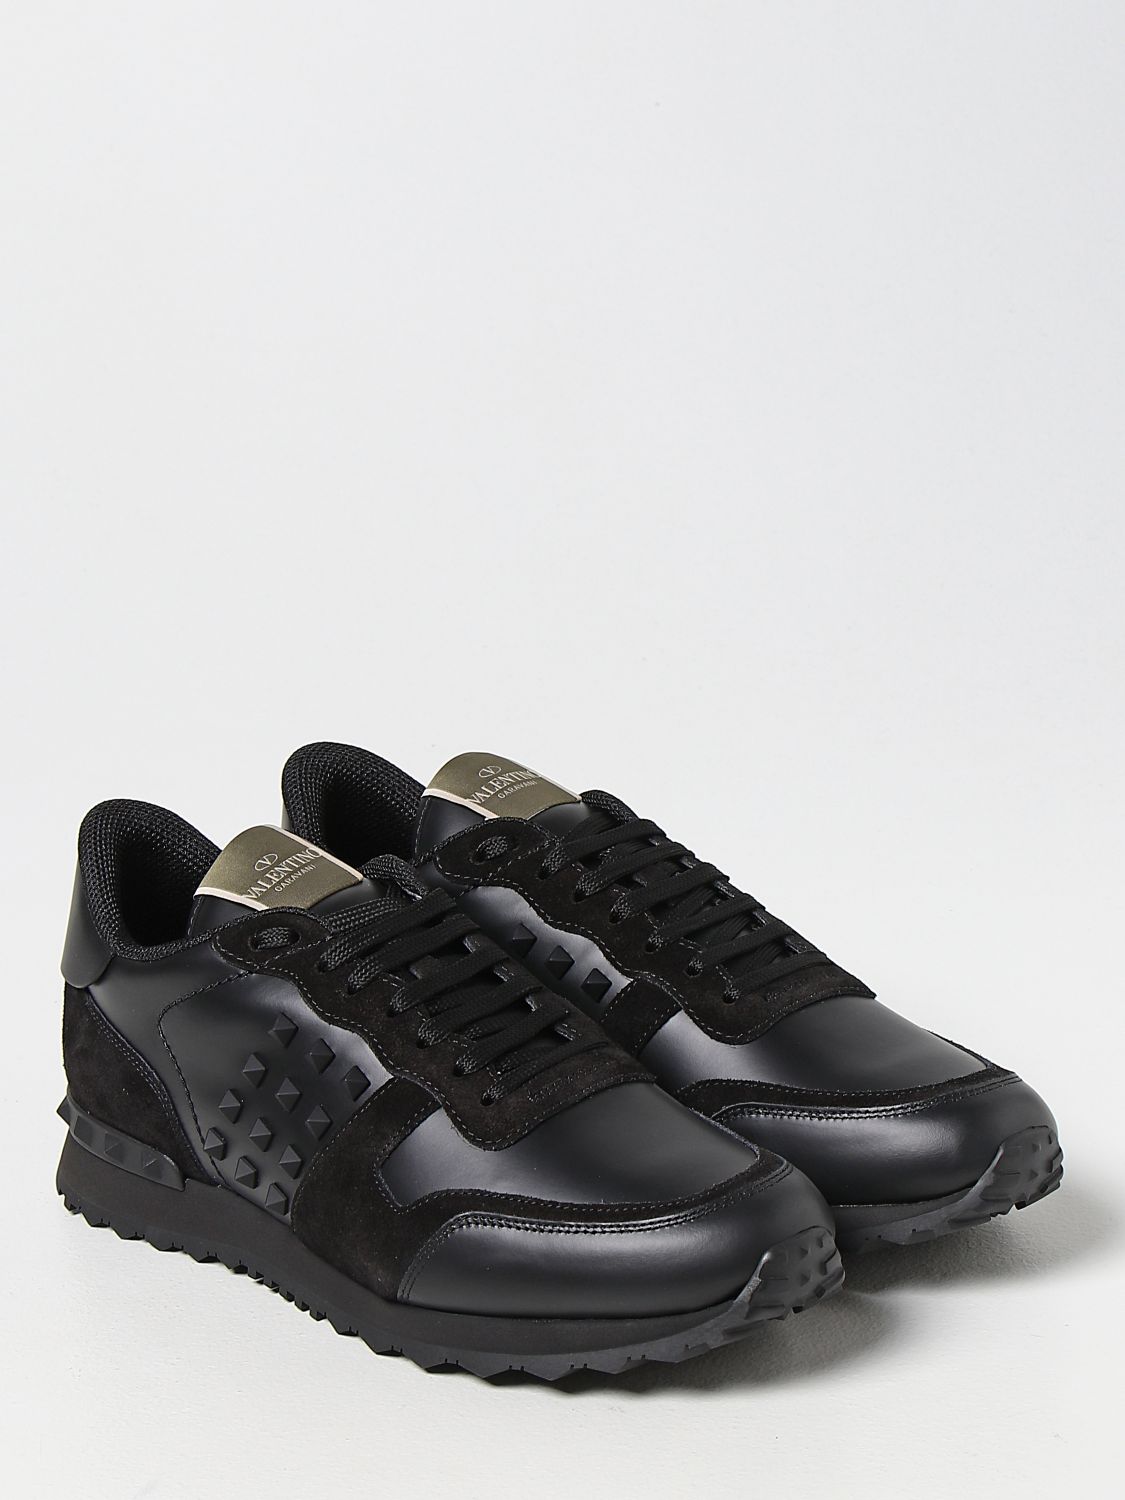 VALENTINO GARAVANI: leather and sneakers - Black | Valentino XY2S0748VRJ online on GIGLIO.COM